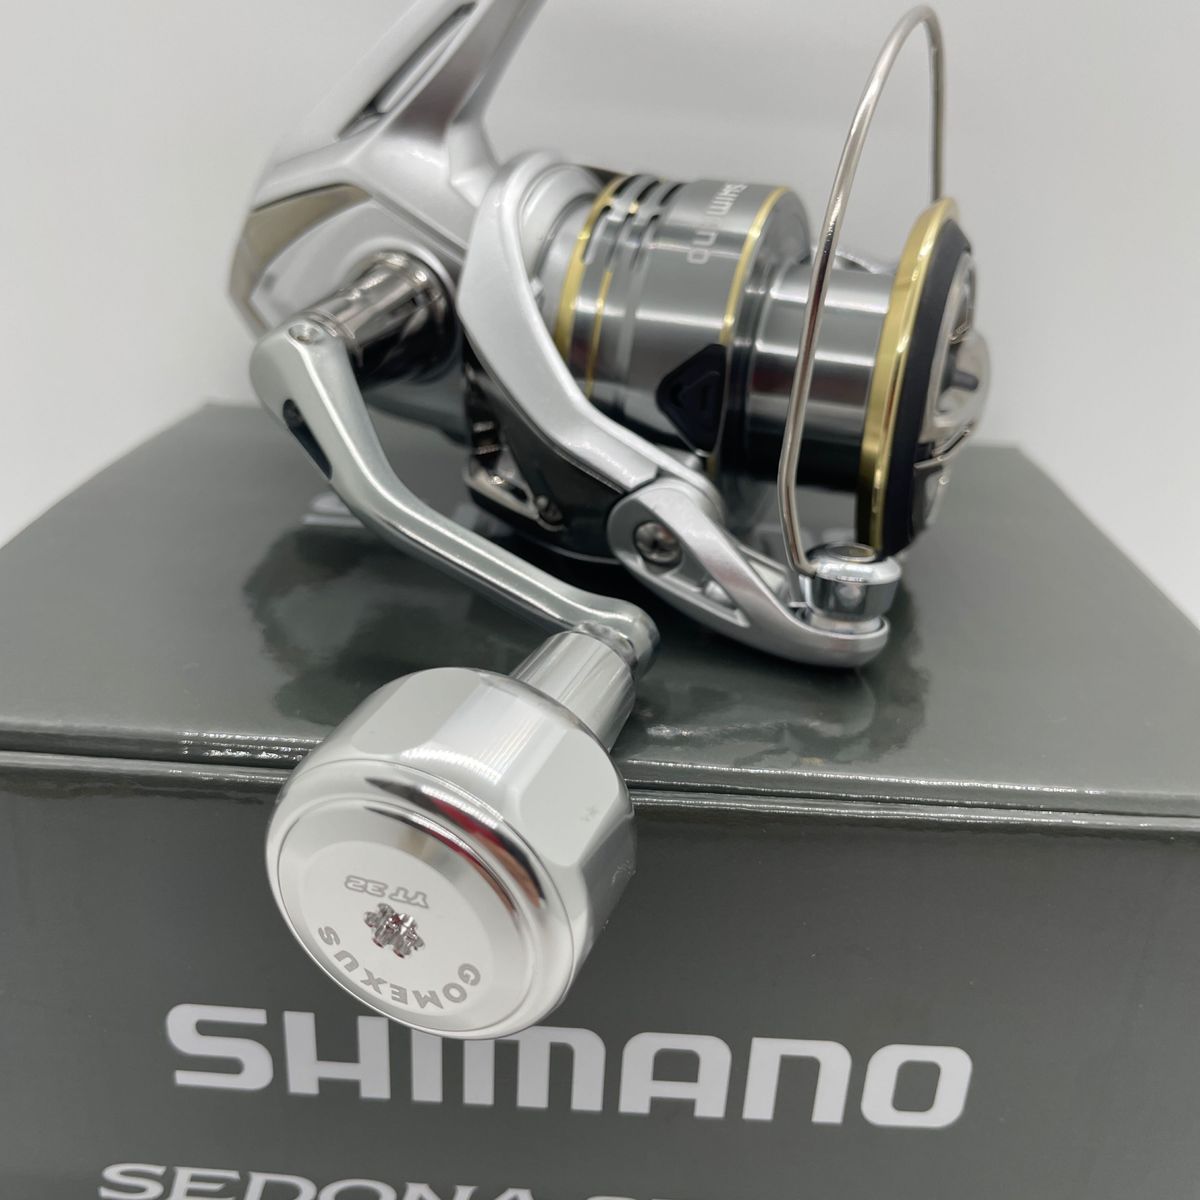 SHIMANO セドナC5000XG 32mmハンドルノブ装着　未使用　 シマノ ジギング